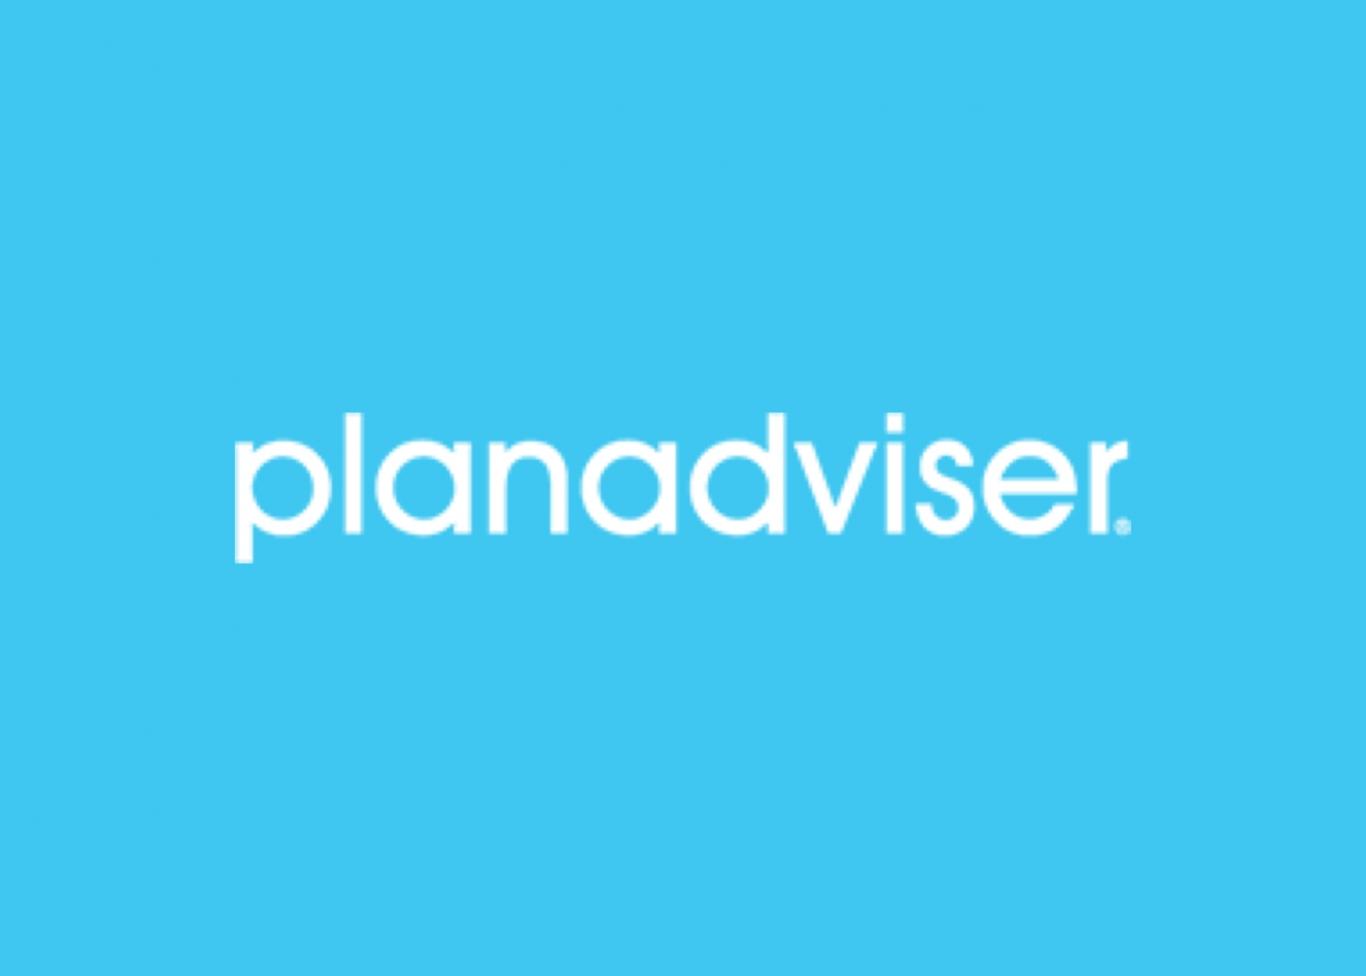 cyan planadvisor logo